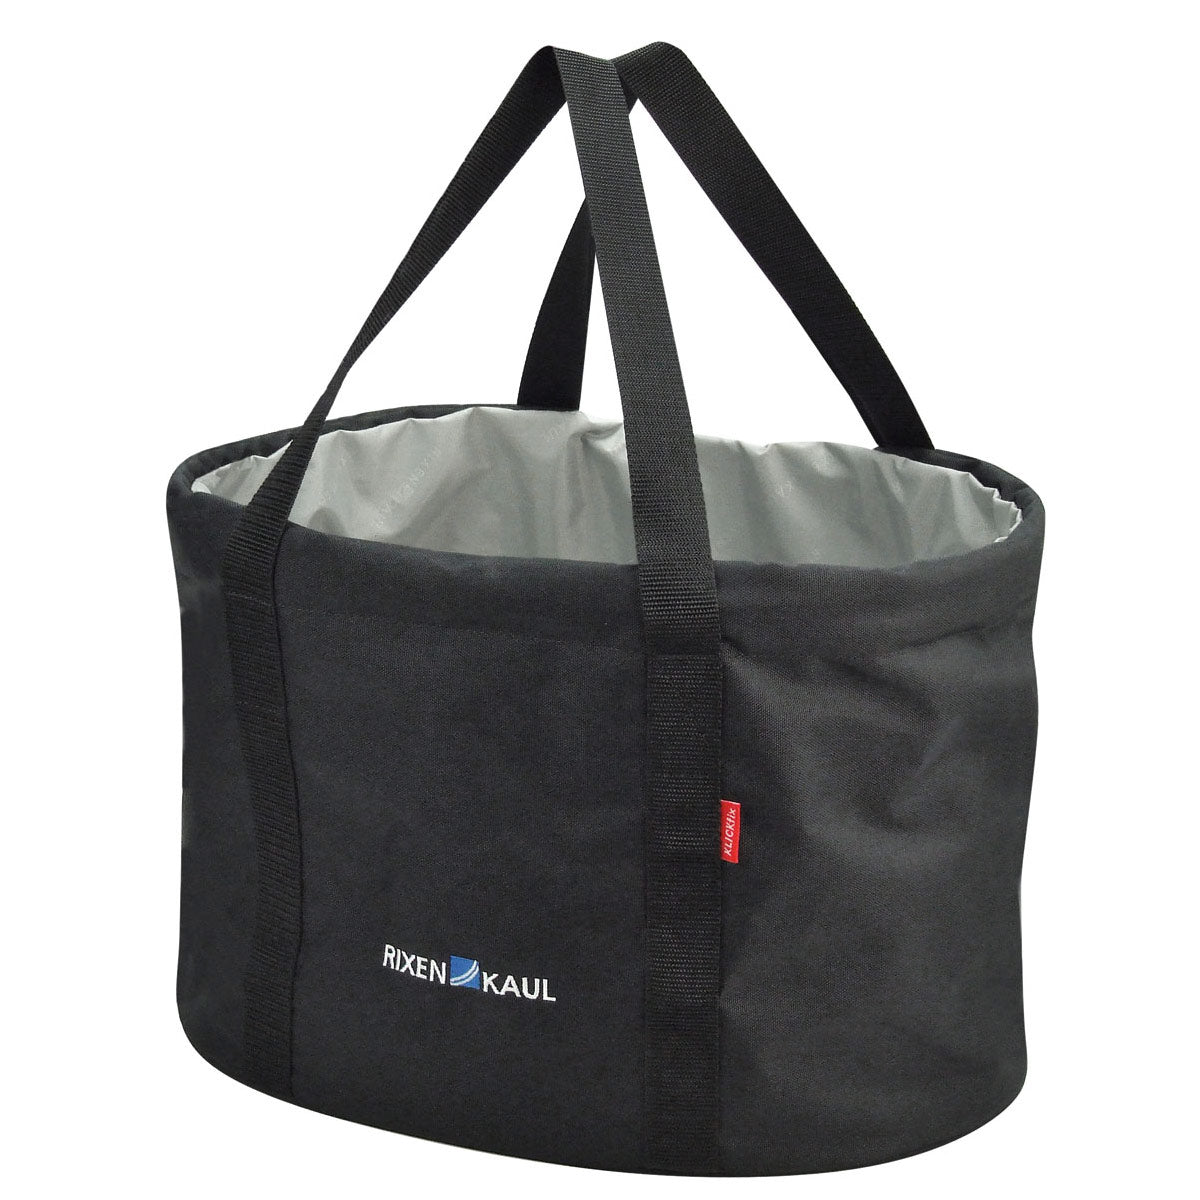 Rixen-Kaul Shopper Pro Black Handlebar Bag